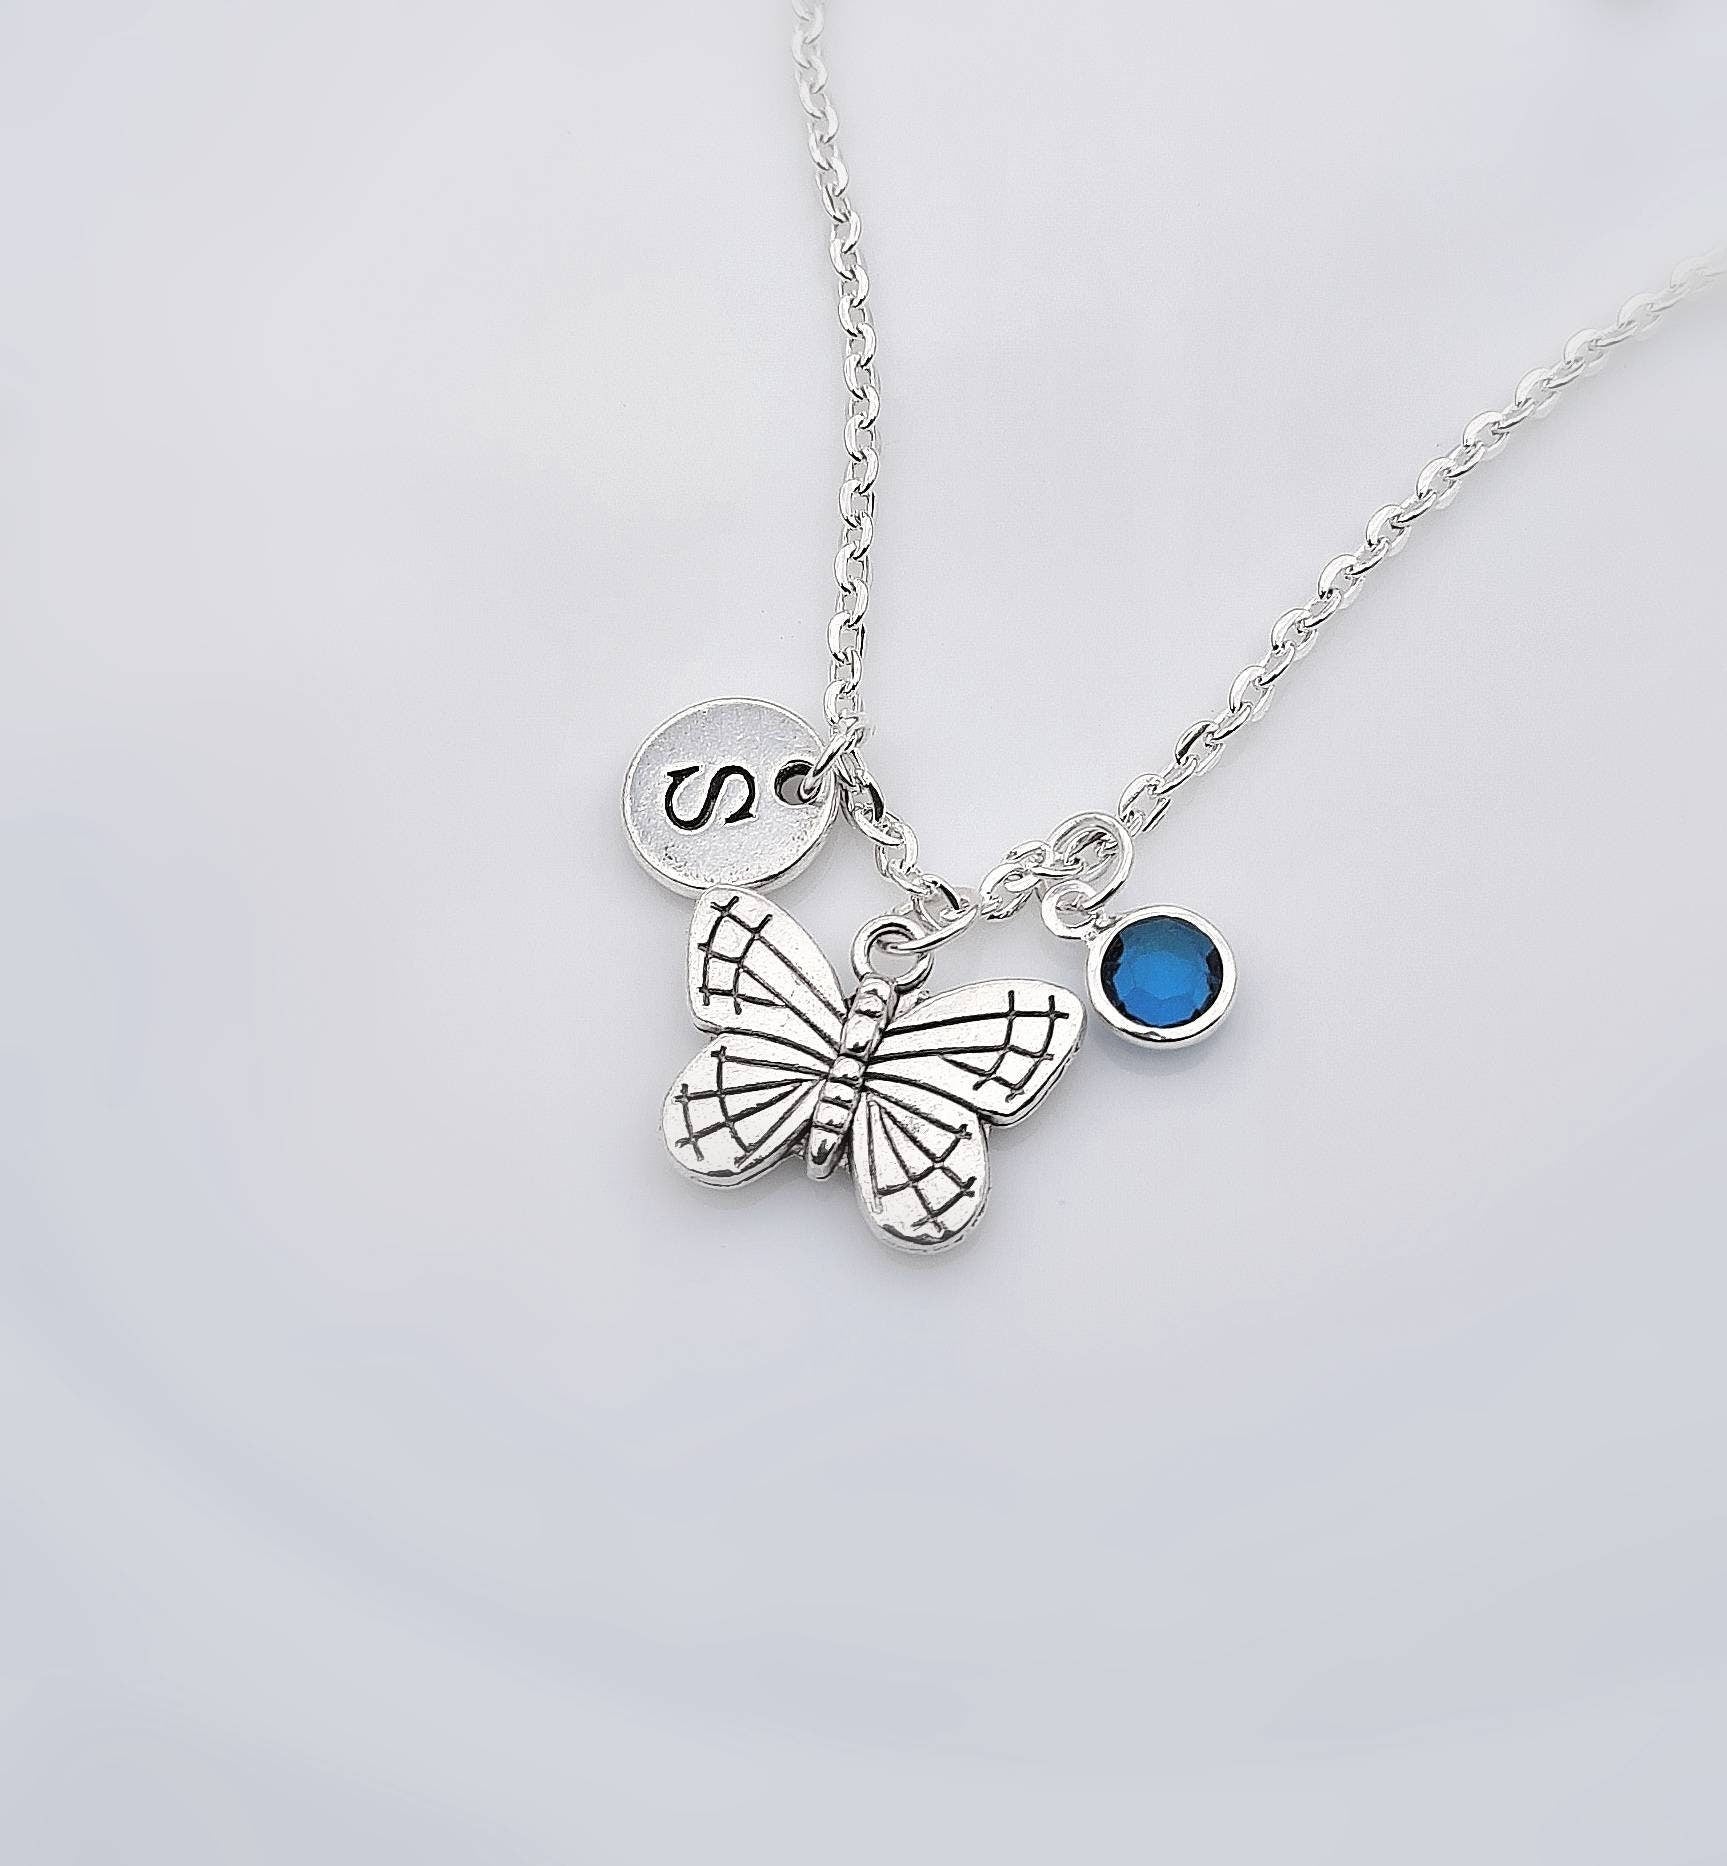 Butterfly Necklace, Butterfly Gift, Butterfly charm, Butter fly Necklace, Butterfly Pendant, Butterfly jewellery, Butterfly Jewelry,Birthday